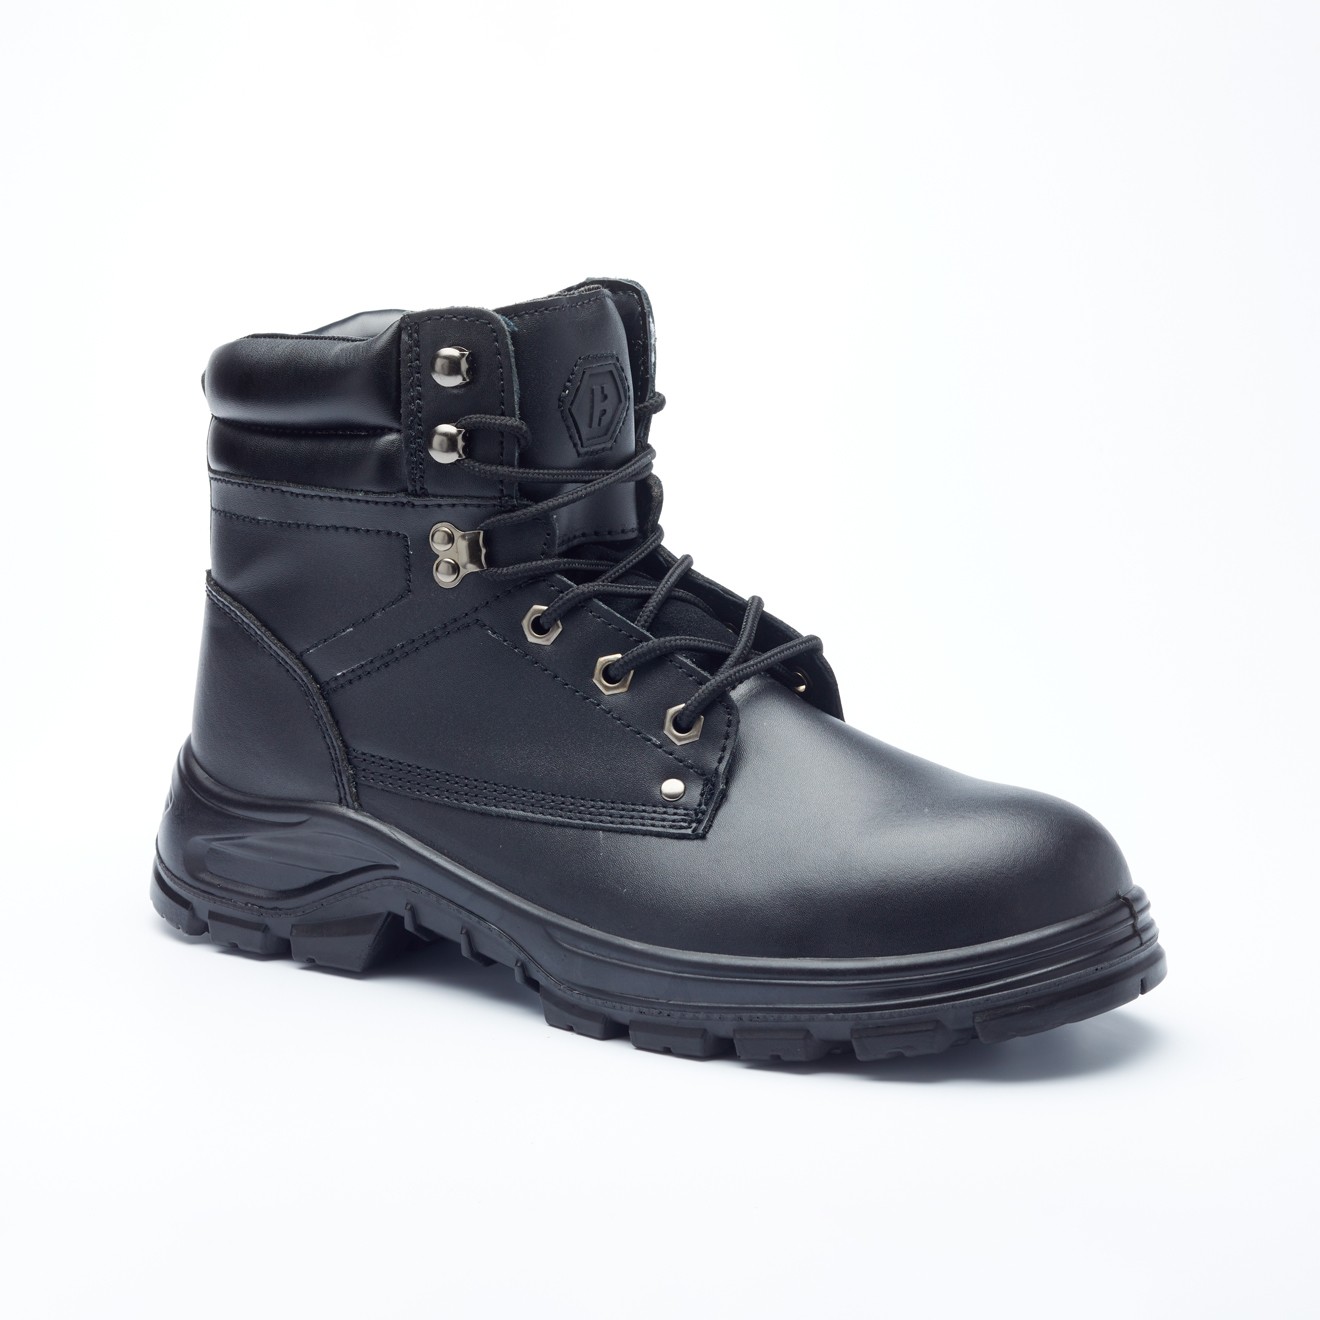 BLACKROCK Sentinel Metal Free Safety Work Boots Shoes Hiker Composite Toe Cap S3 